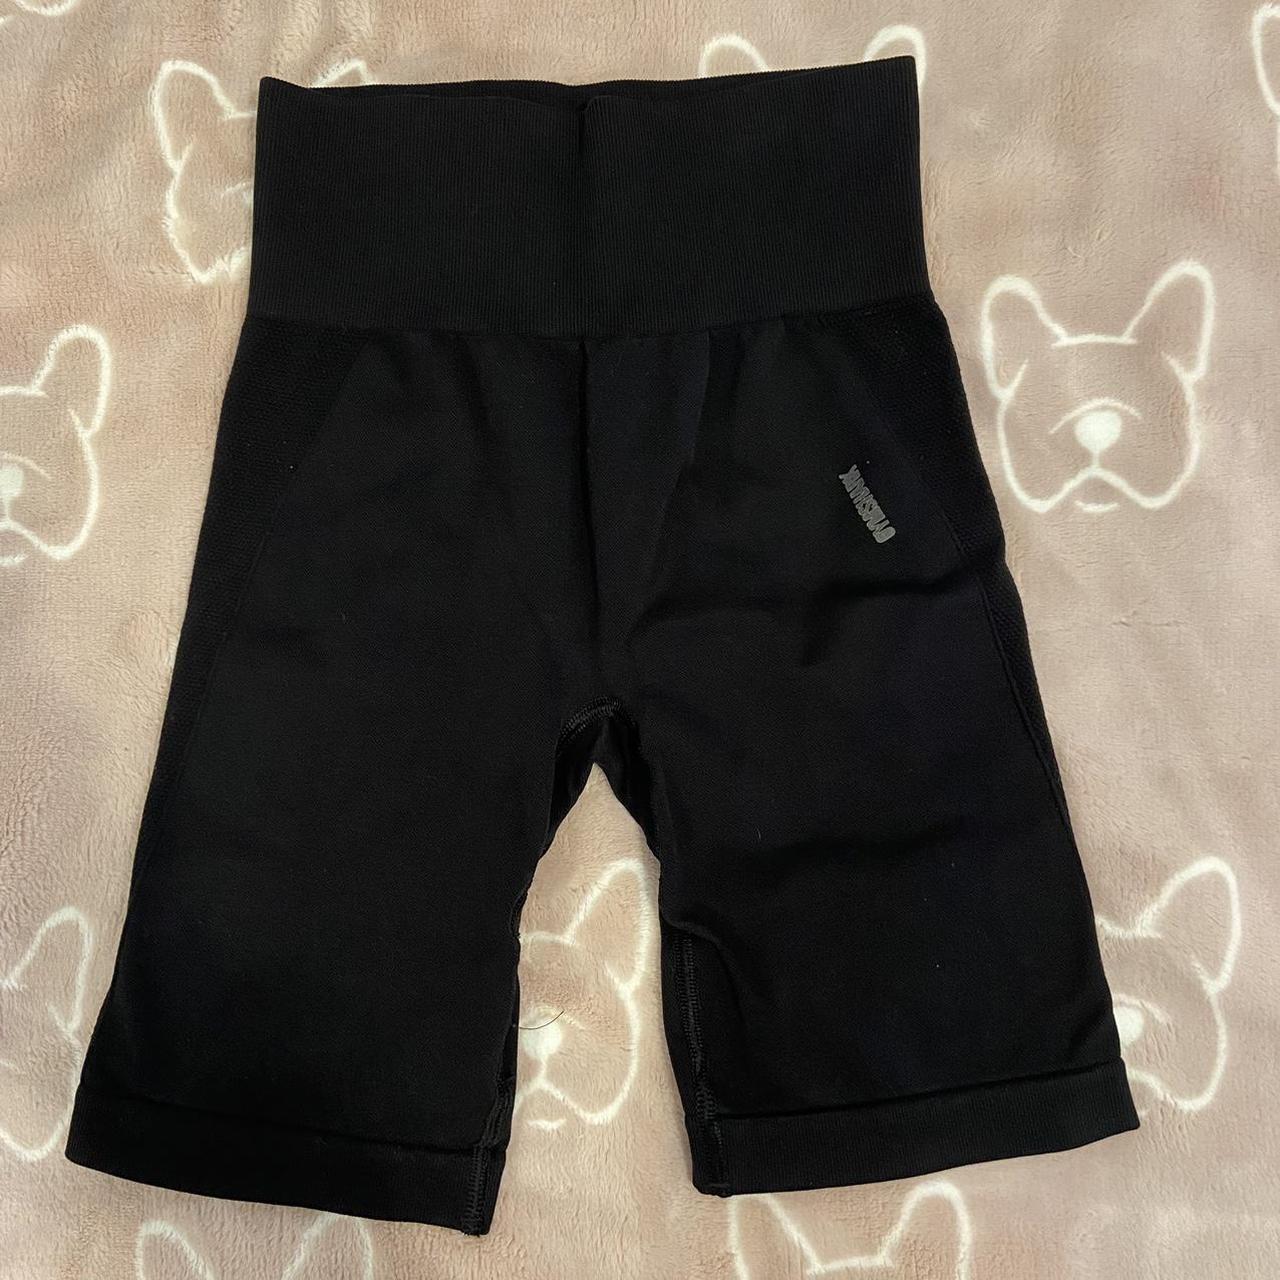 Gymshark Pocket Shorts - Black